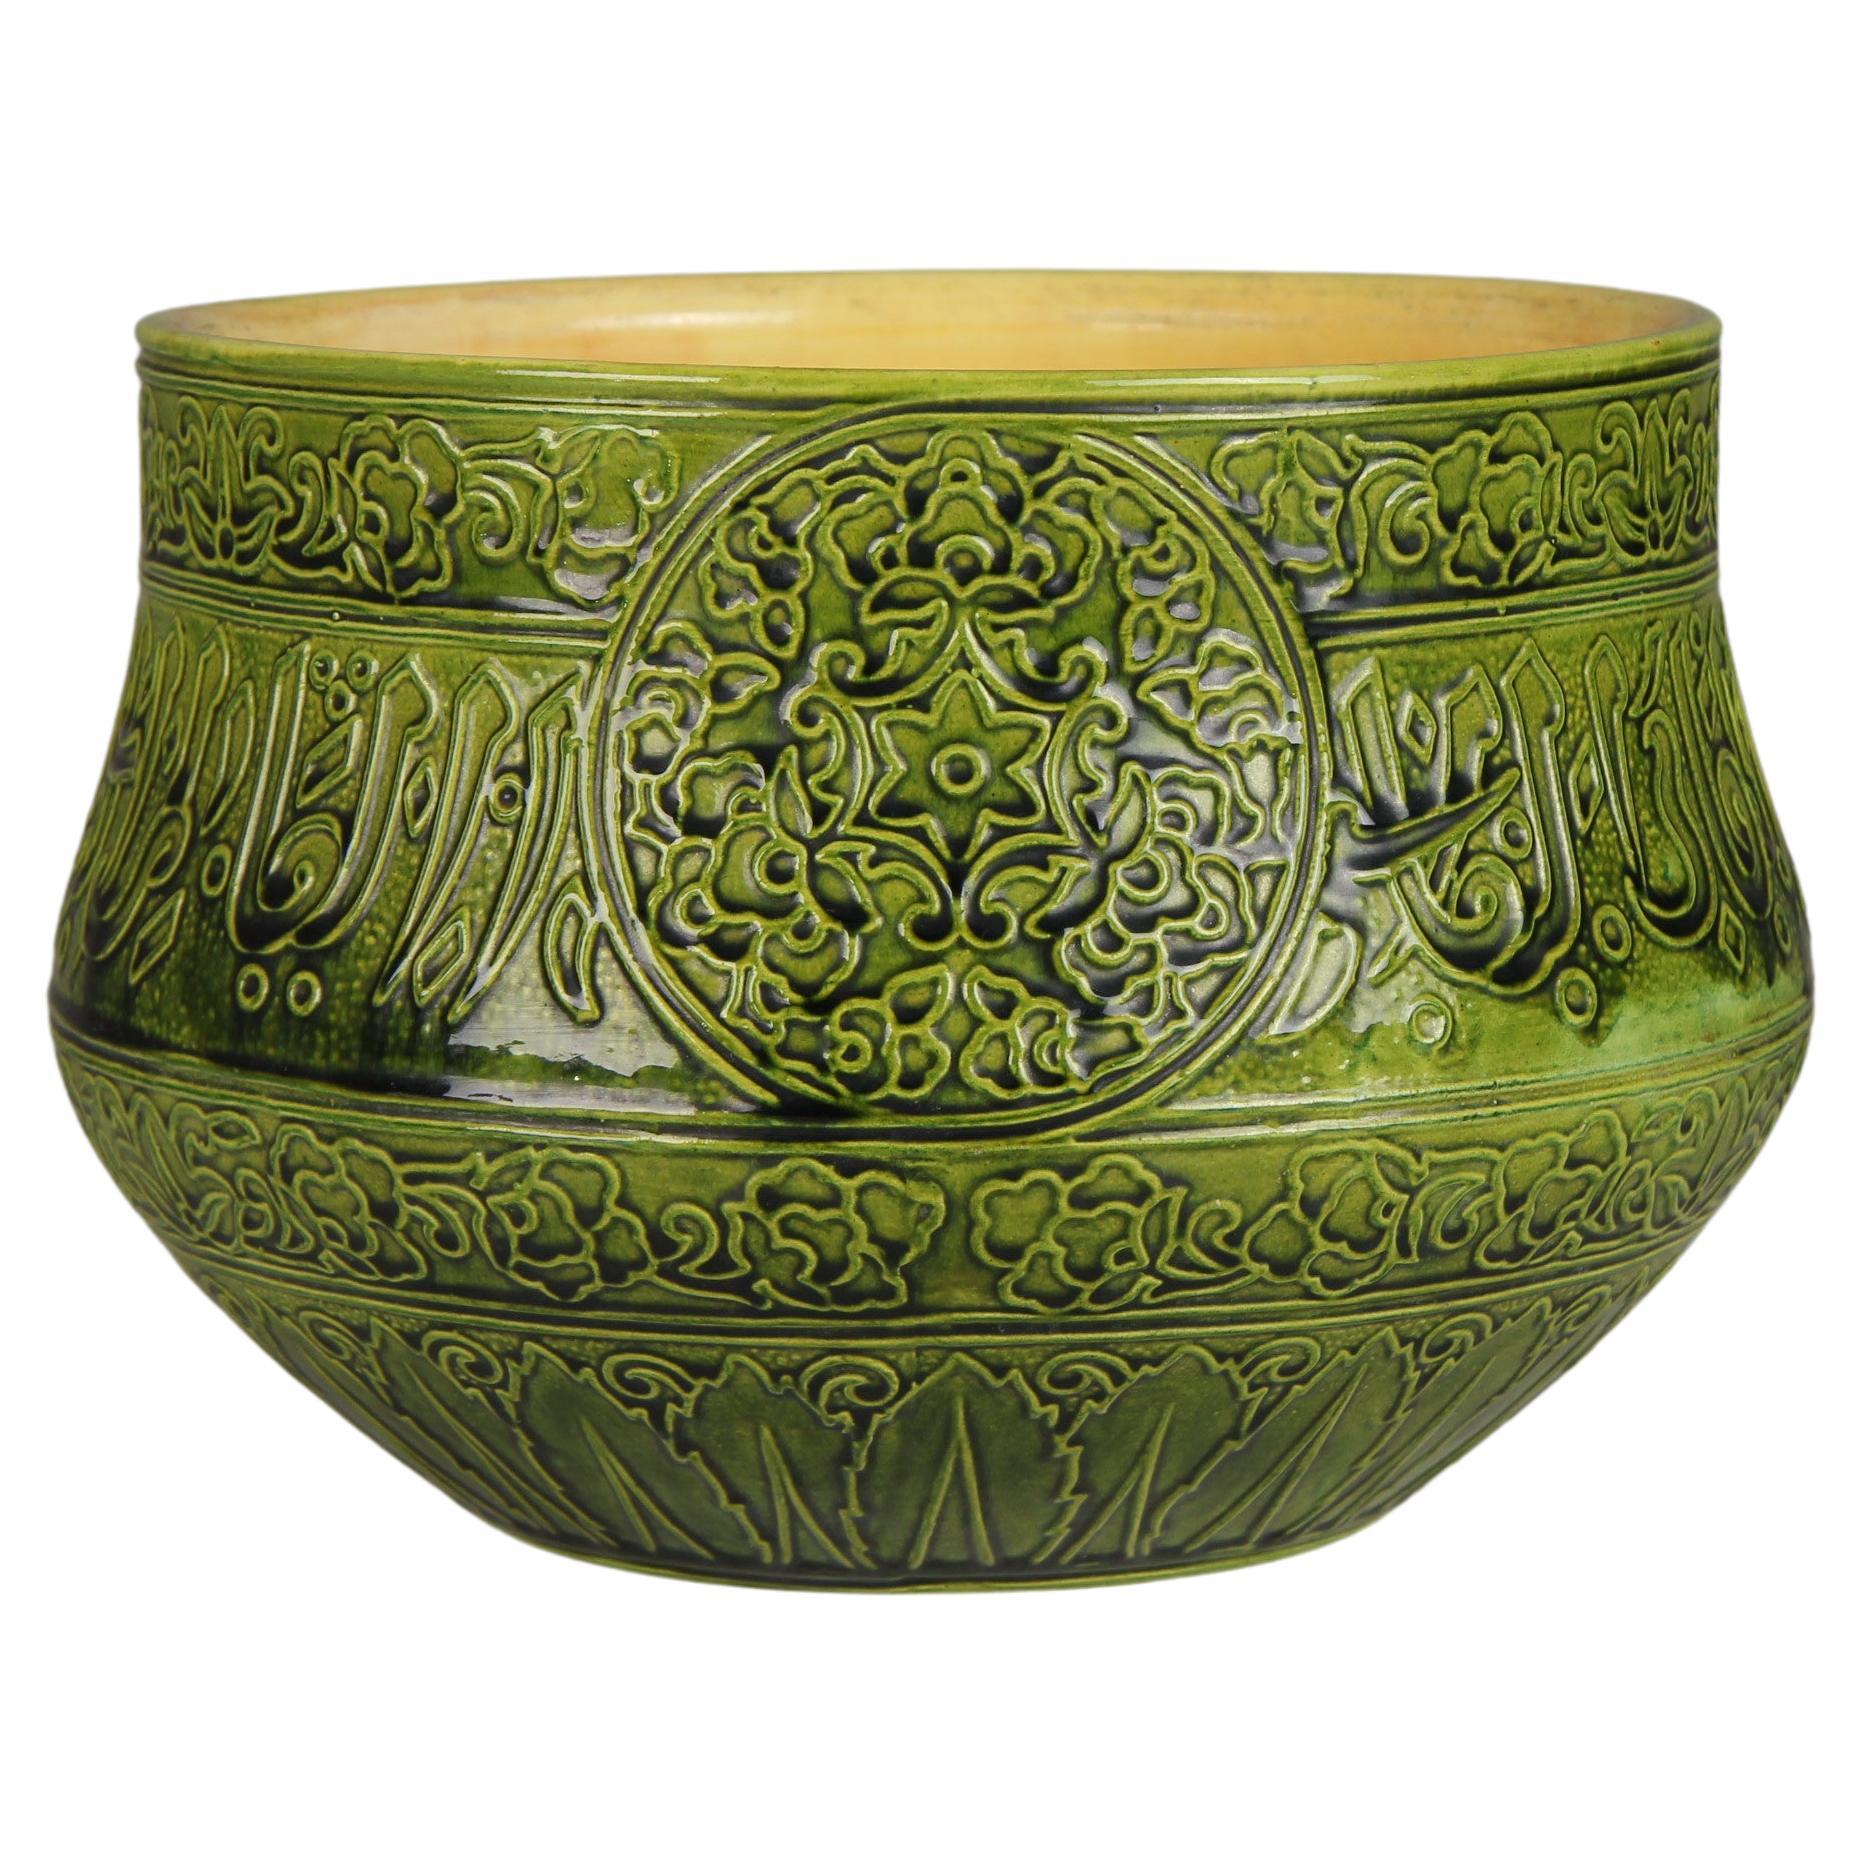 Orientalistic Ceramic Flower Pot, France, Circa 1880, Arabic Script